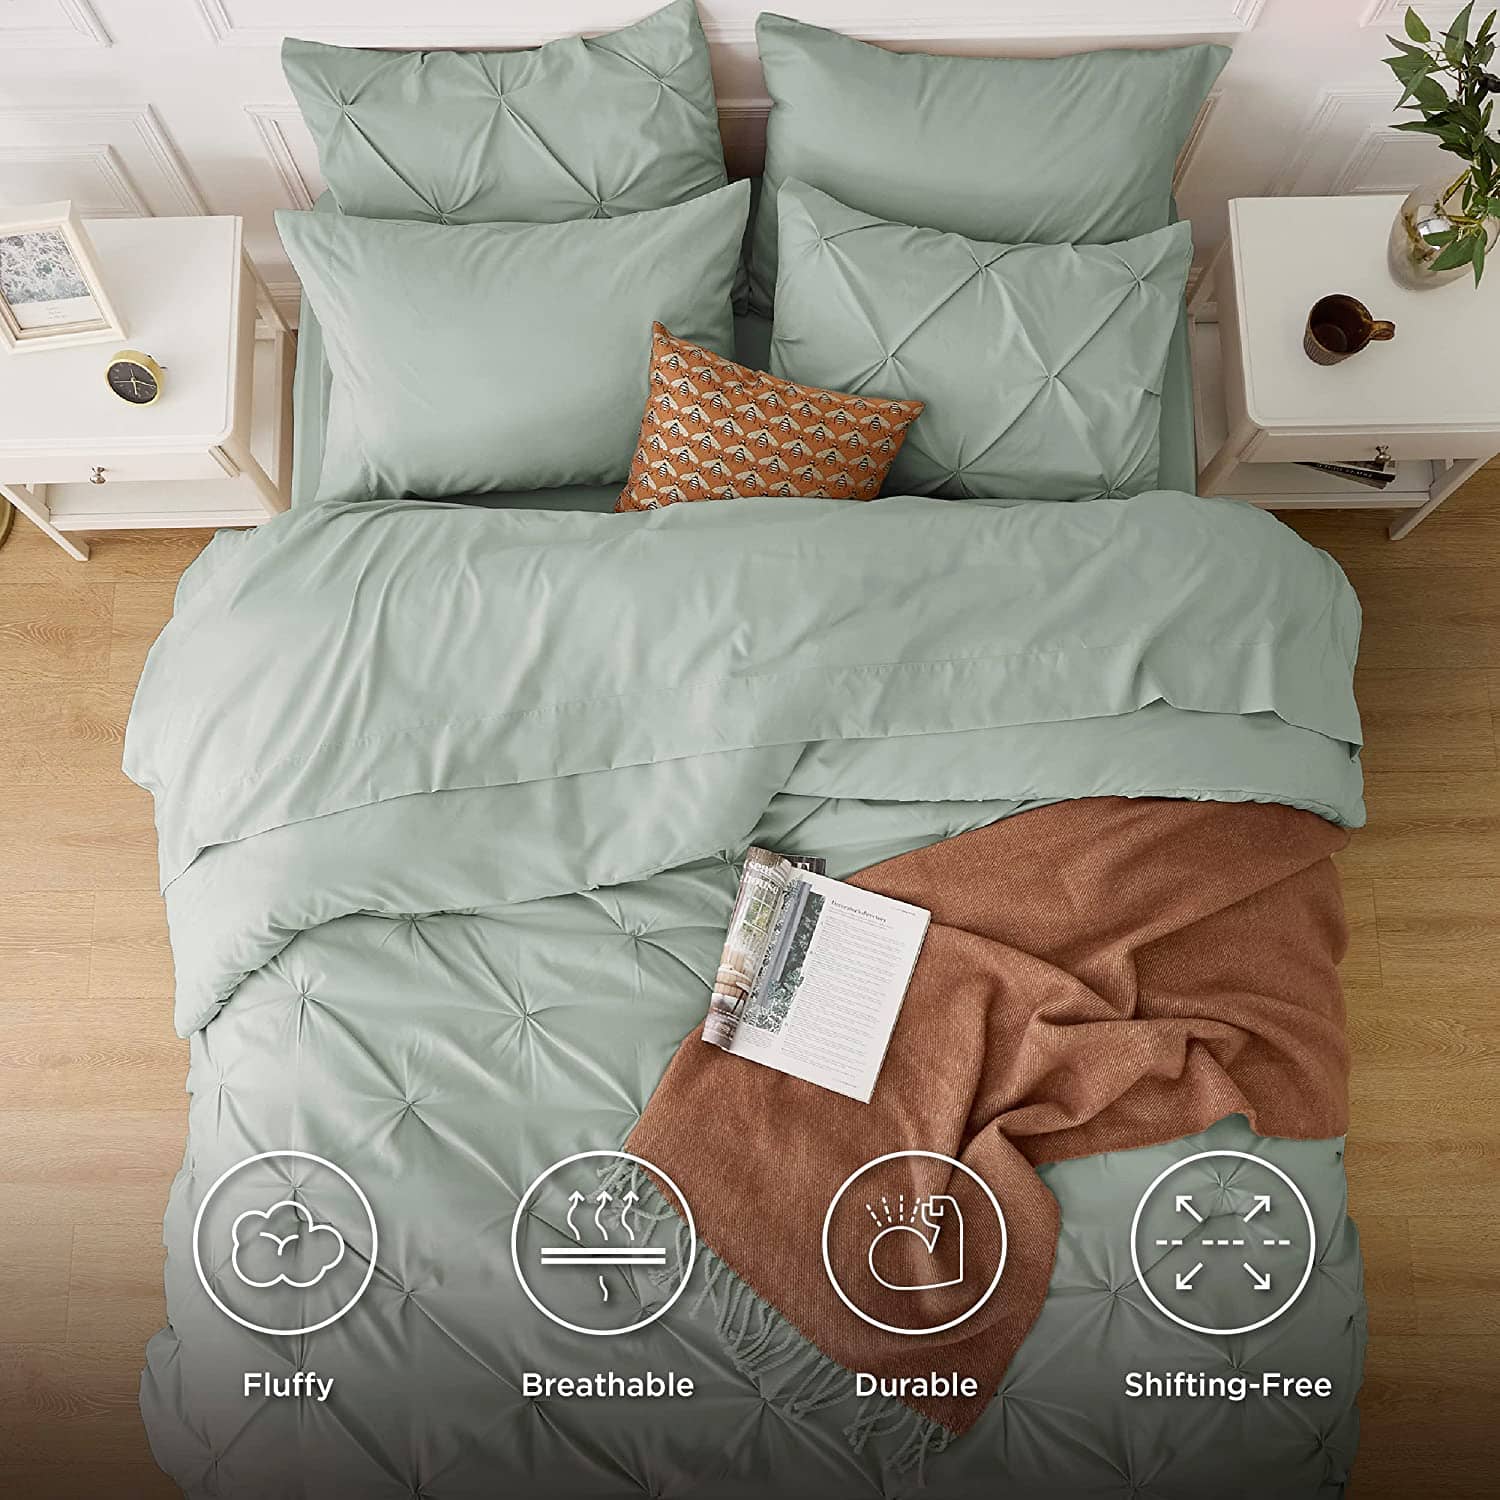  Bedsure Twin Comforter Set Dorm Bedding - Sage Green, Cute  Floral Bedding Comforter Set for Women, Soft Reversible Botanical Flowers  Comforter, 2 Pieces, Includes 1 Comforter & 1 Pillow Sham : Home & Kitchen